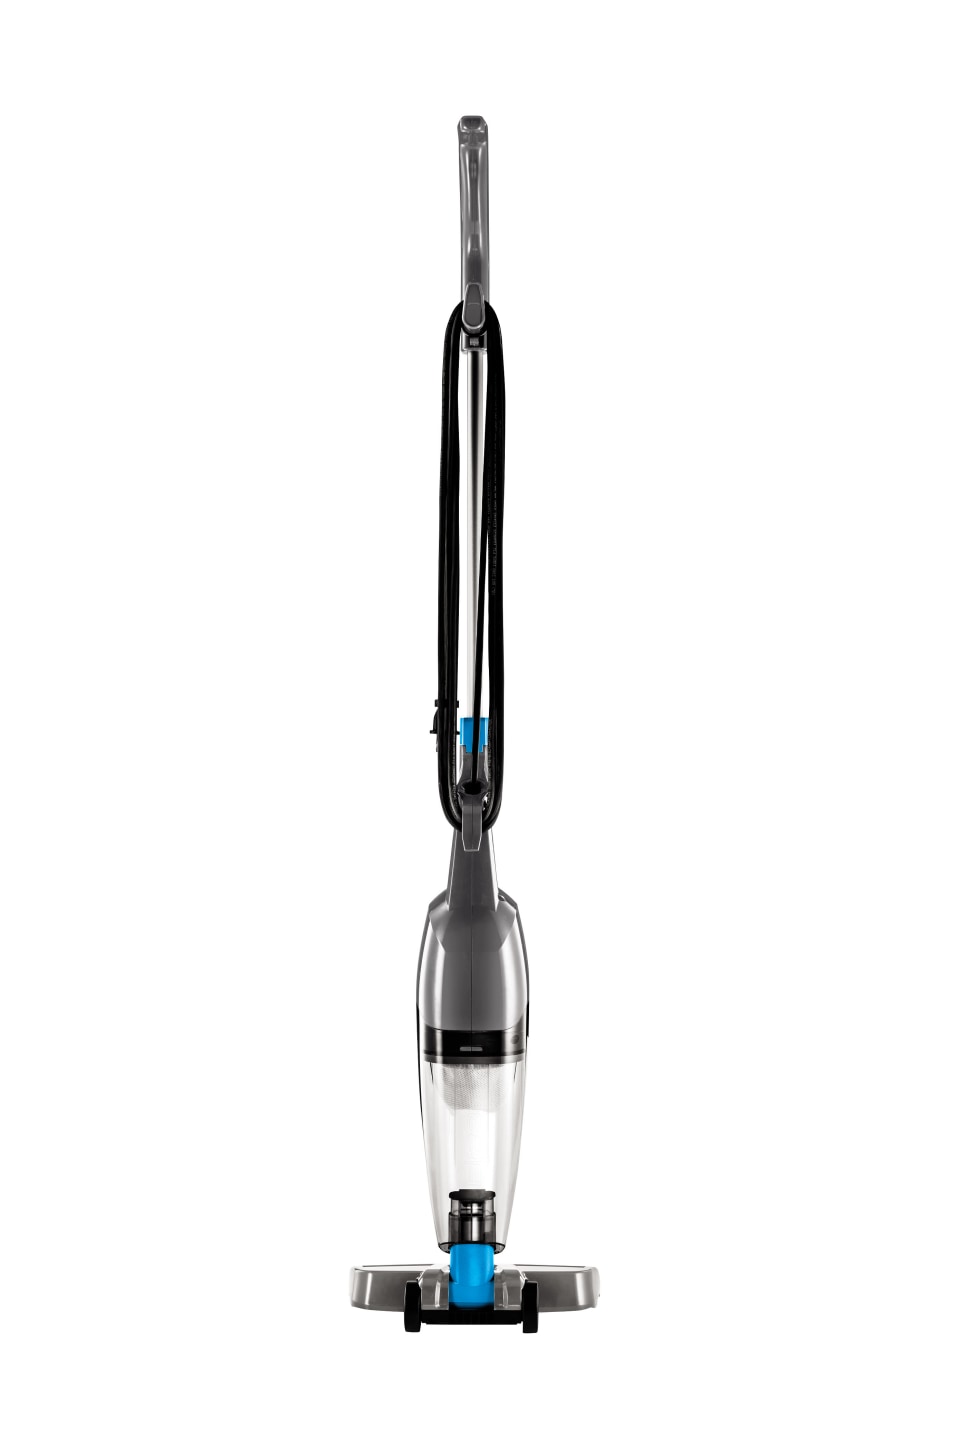 BISSELL 3-in-1 Lightweight Corded Stick Vacuum - Walmart.com